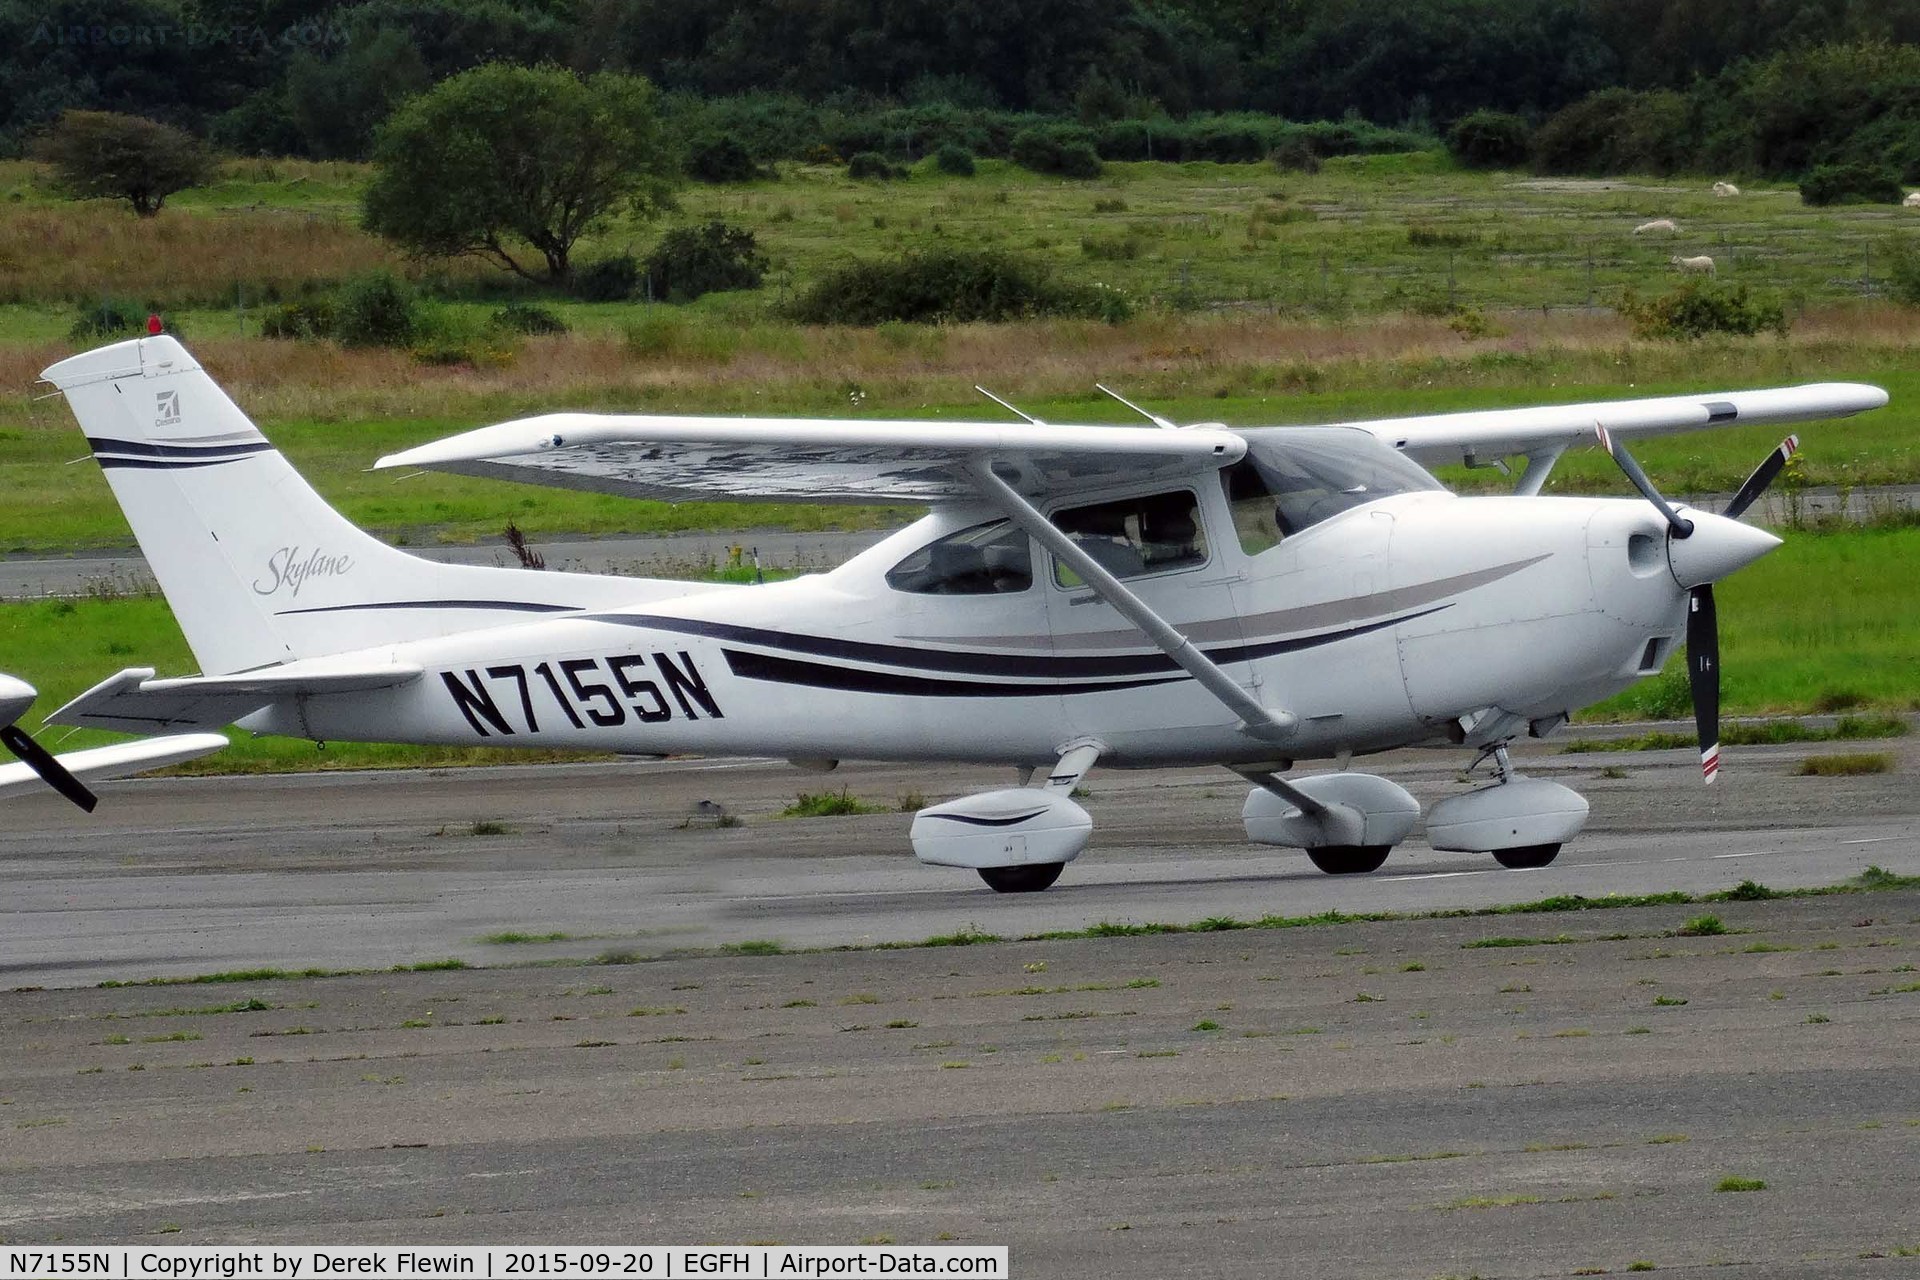 N7155N, 1999 Cessna 182S Skylane C/N 182-80554, Skylane, Dunkeswell based, seen parked up.